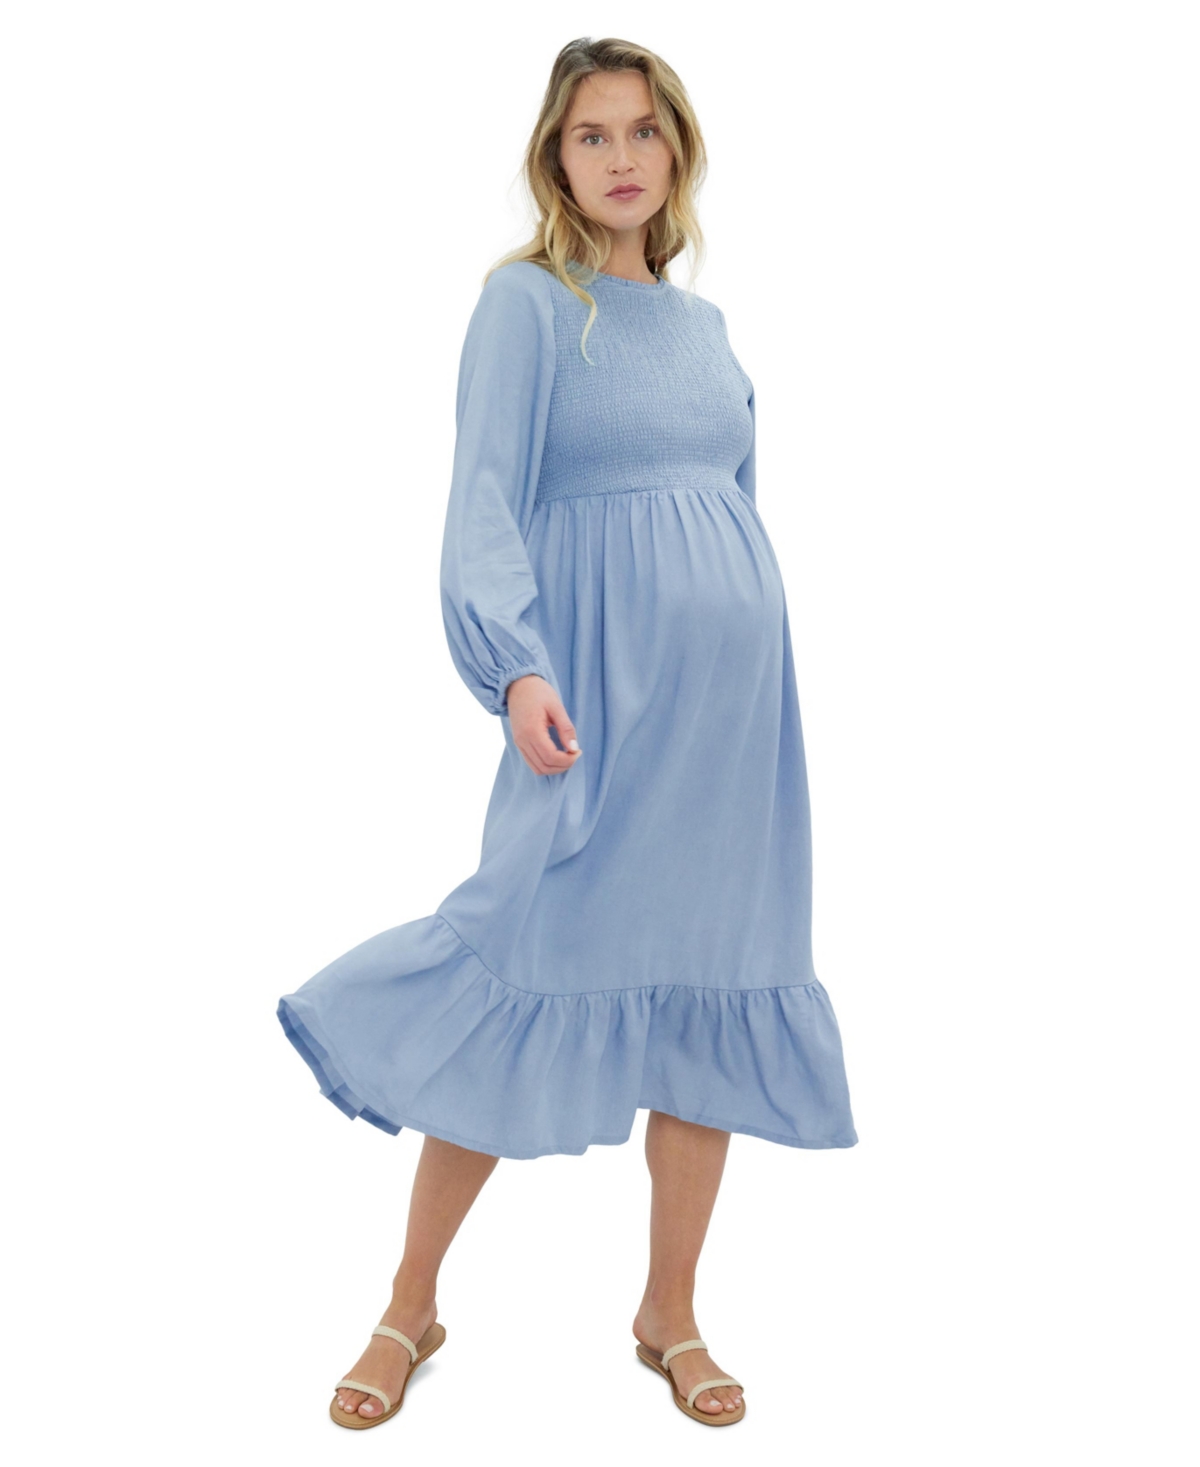 Ingrid + Isabel Women's Maternity Meadow Chambray Dress